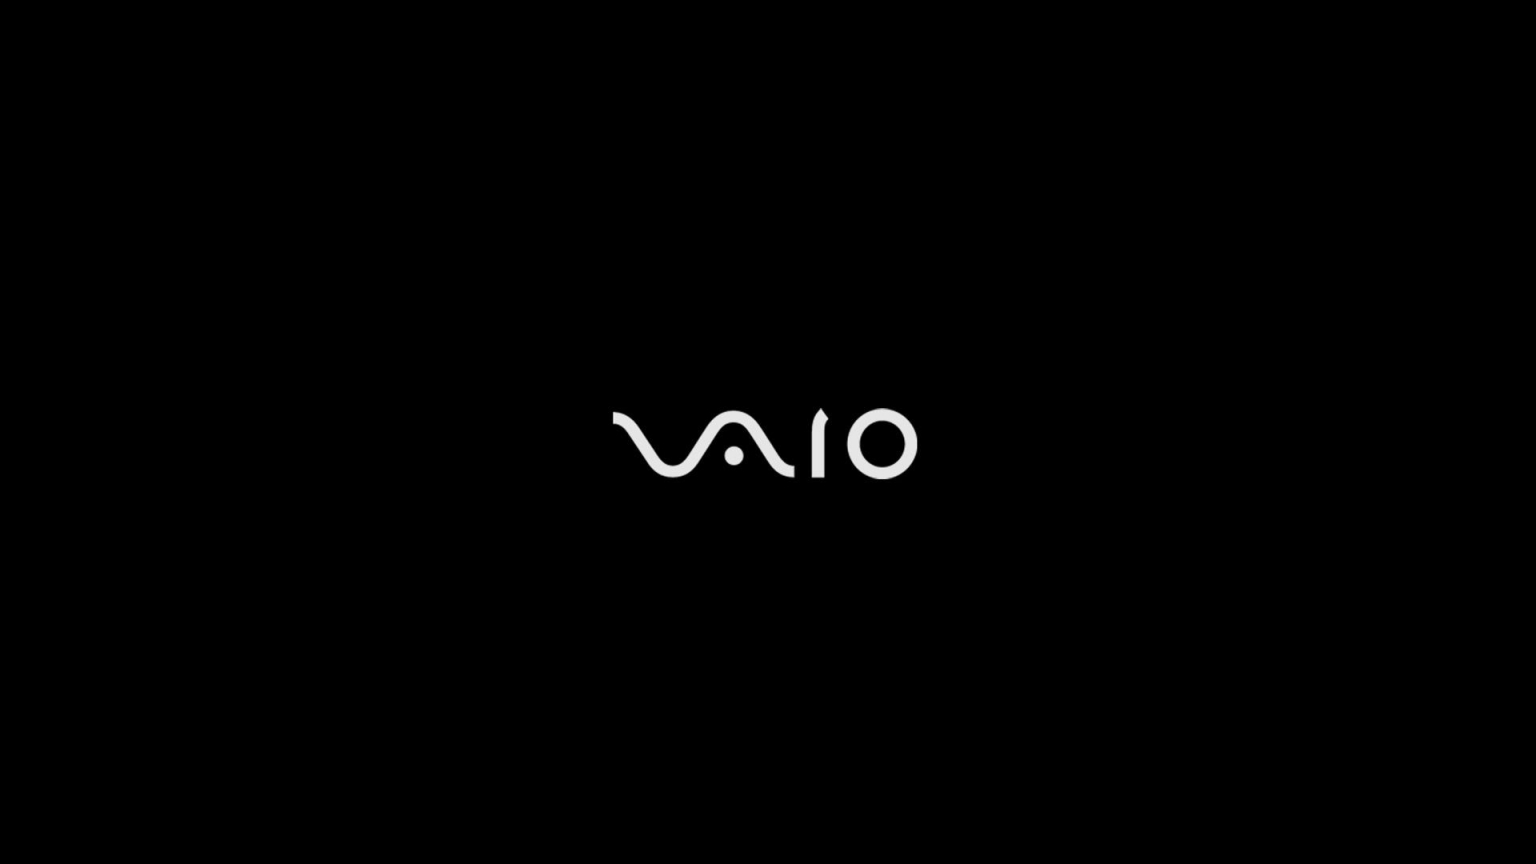 Vaio Black for 1536 x 864 HDTV resolution